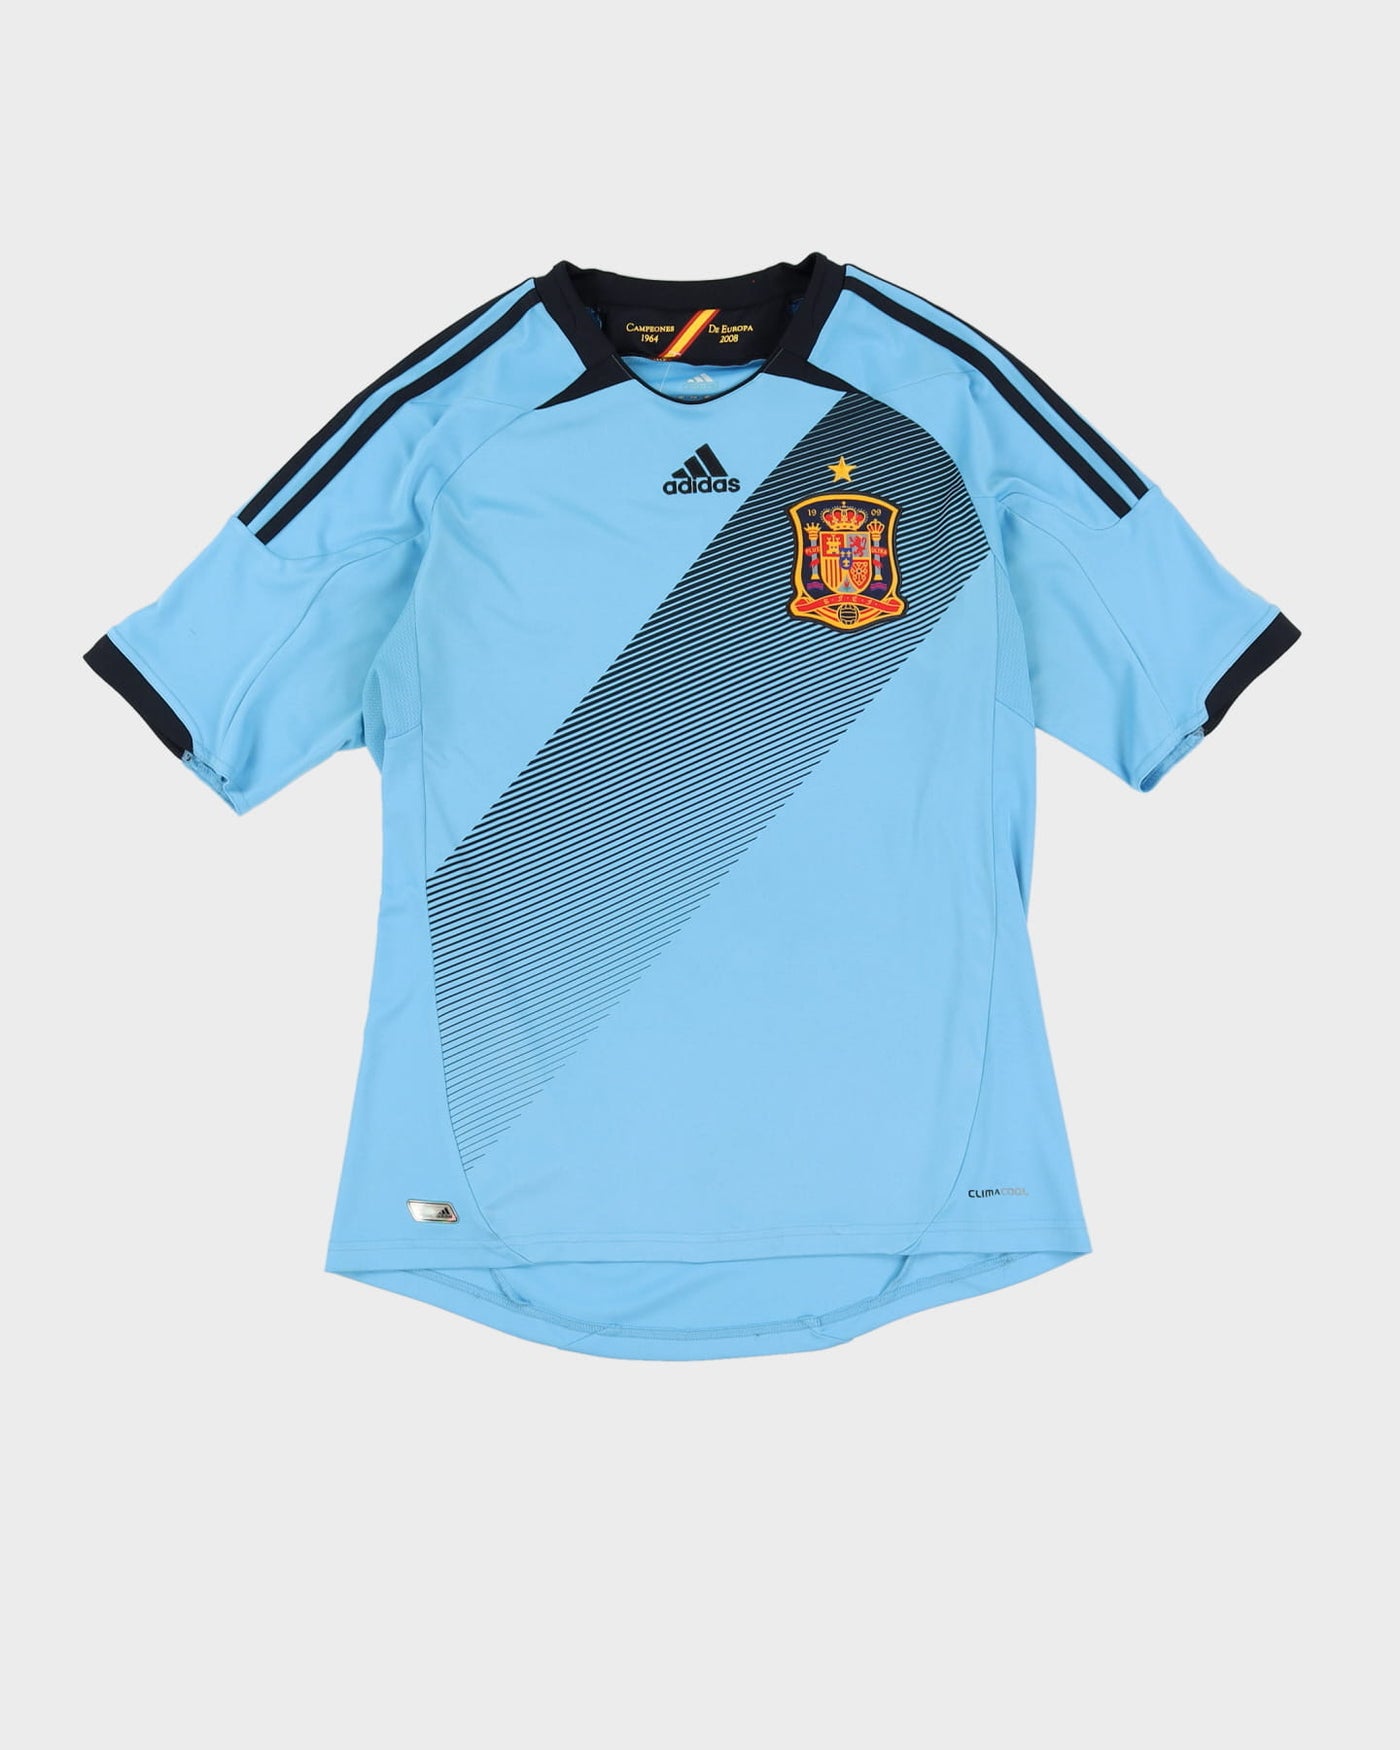 Adidas Spain 2012-13 National Team Football Shirt / Jersey - L